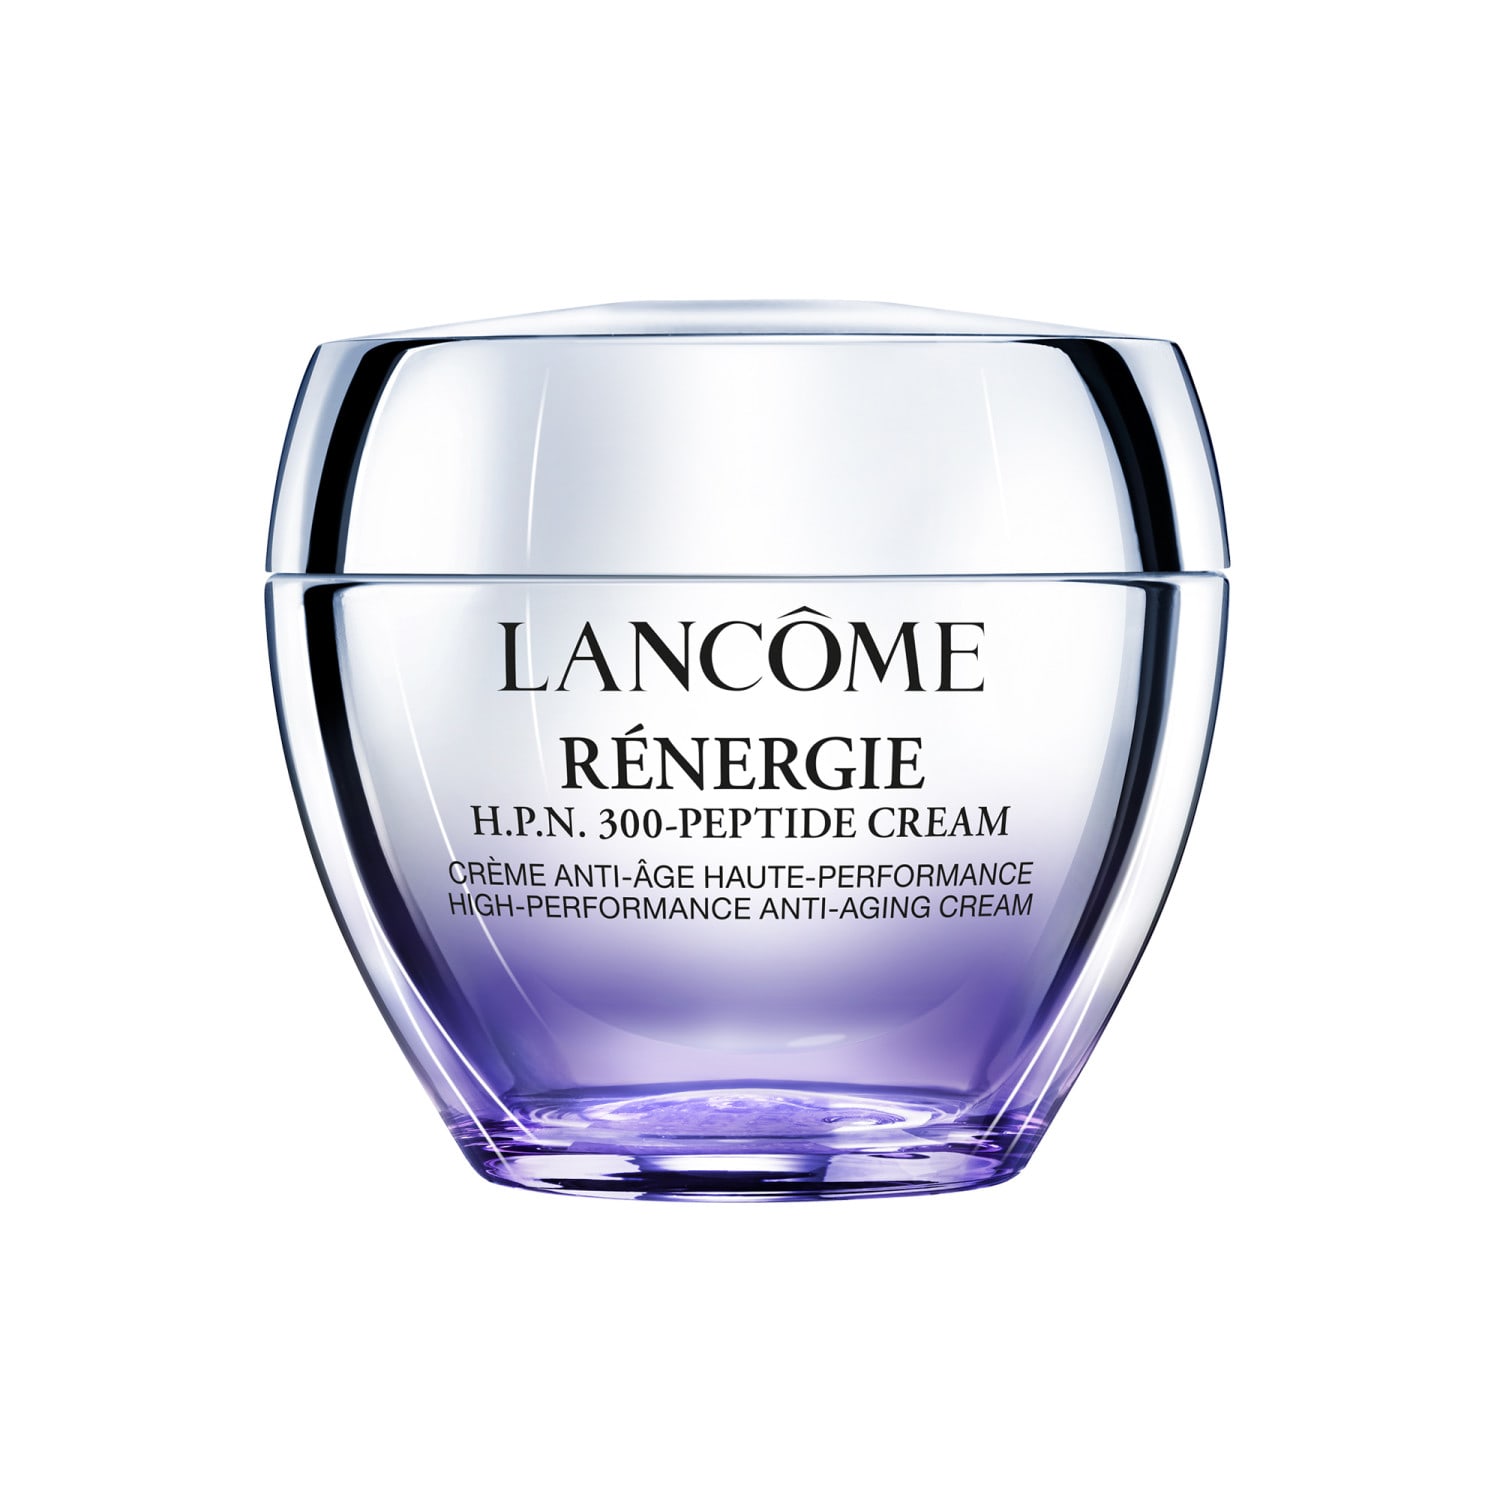 Rénergie H.P.N. 300-Peptide Cream från Lancôme